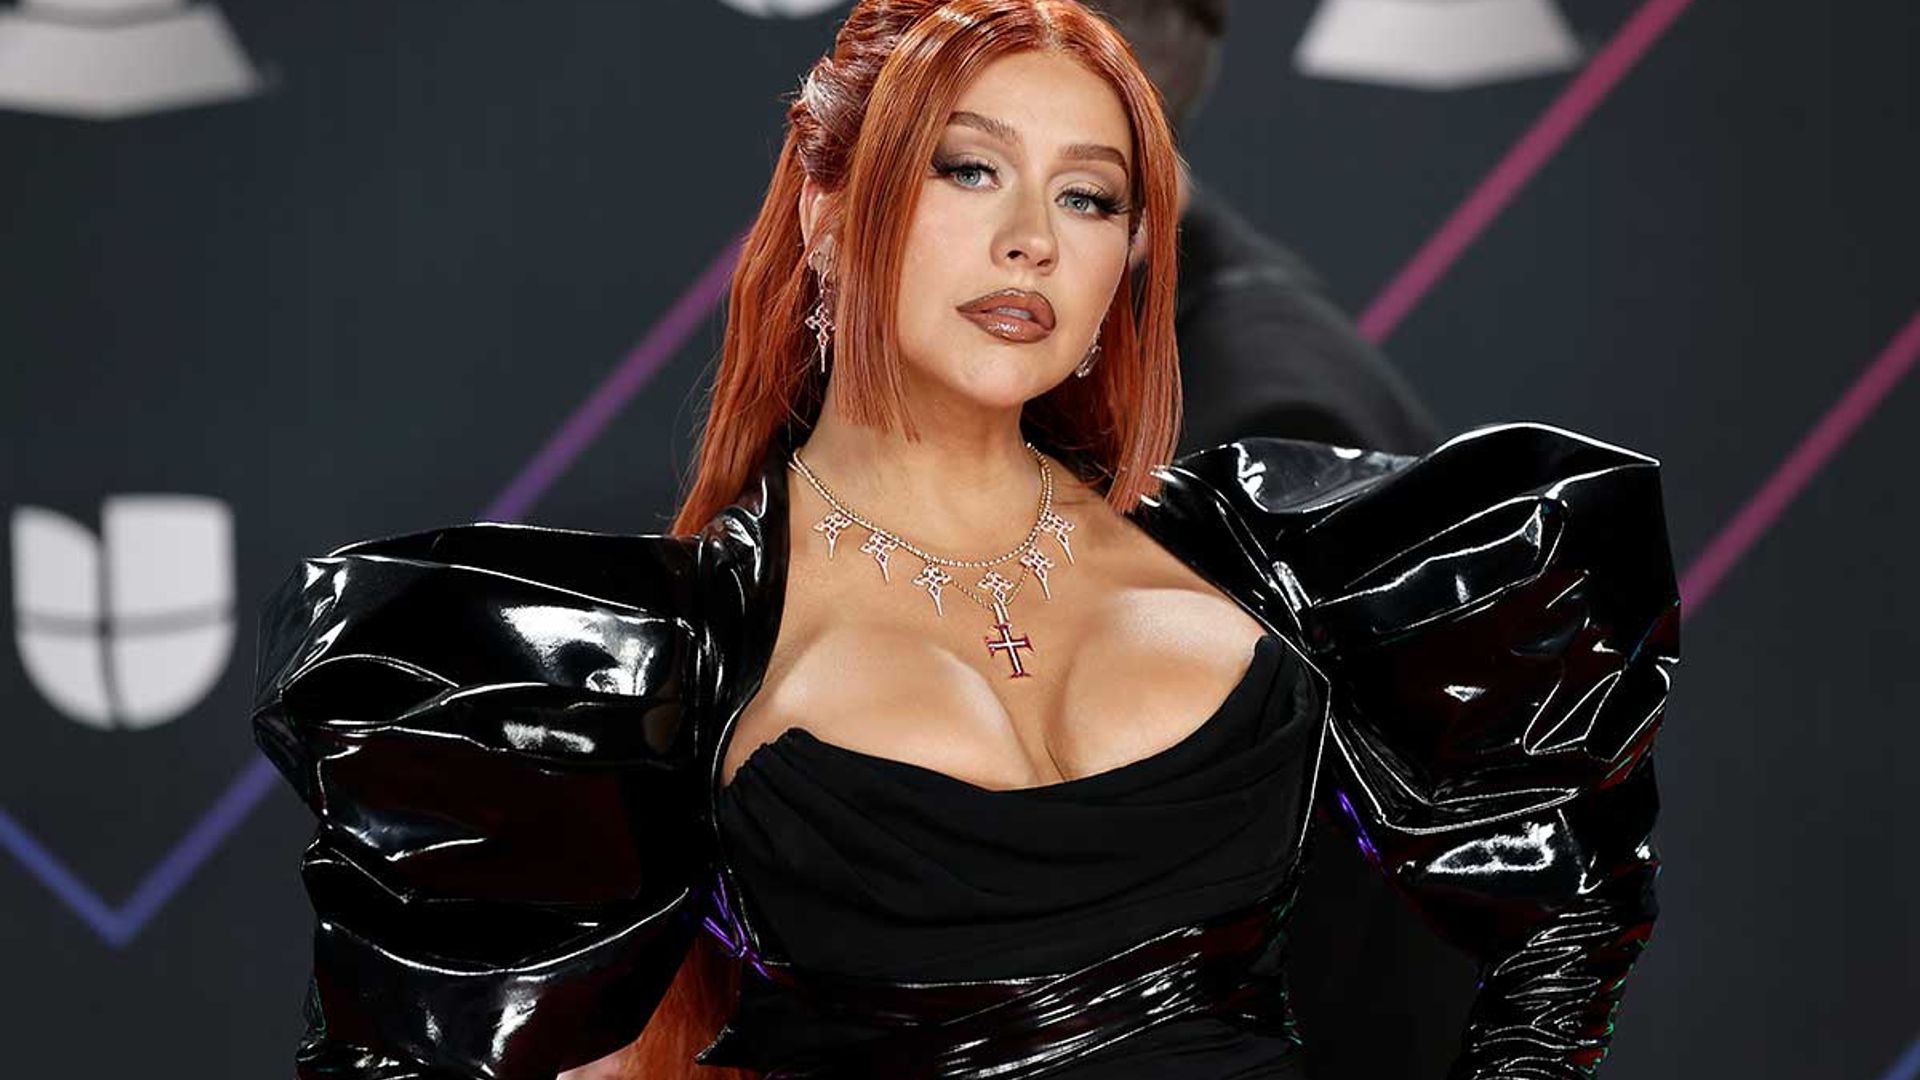 Christina Aguilera turns heads in daring lace bodysuit at Latin Grammy Awards